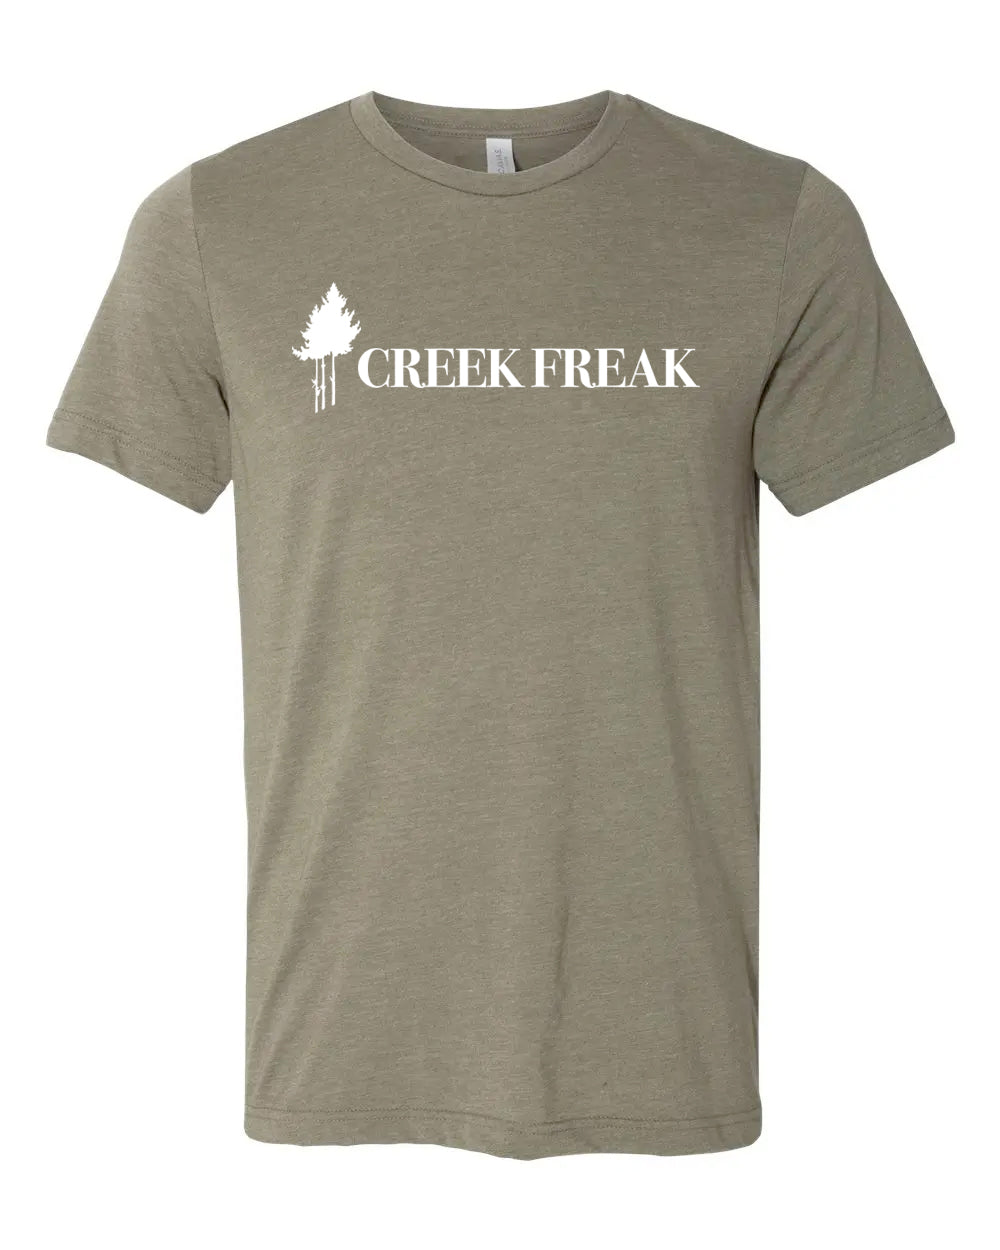 CREEK FREAK T-Shirts | Unsettled Apparel